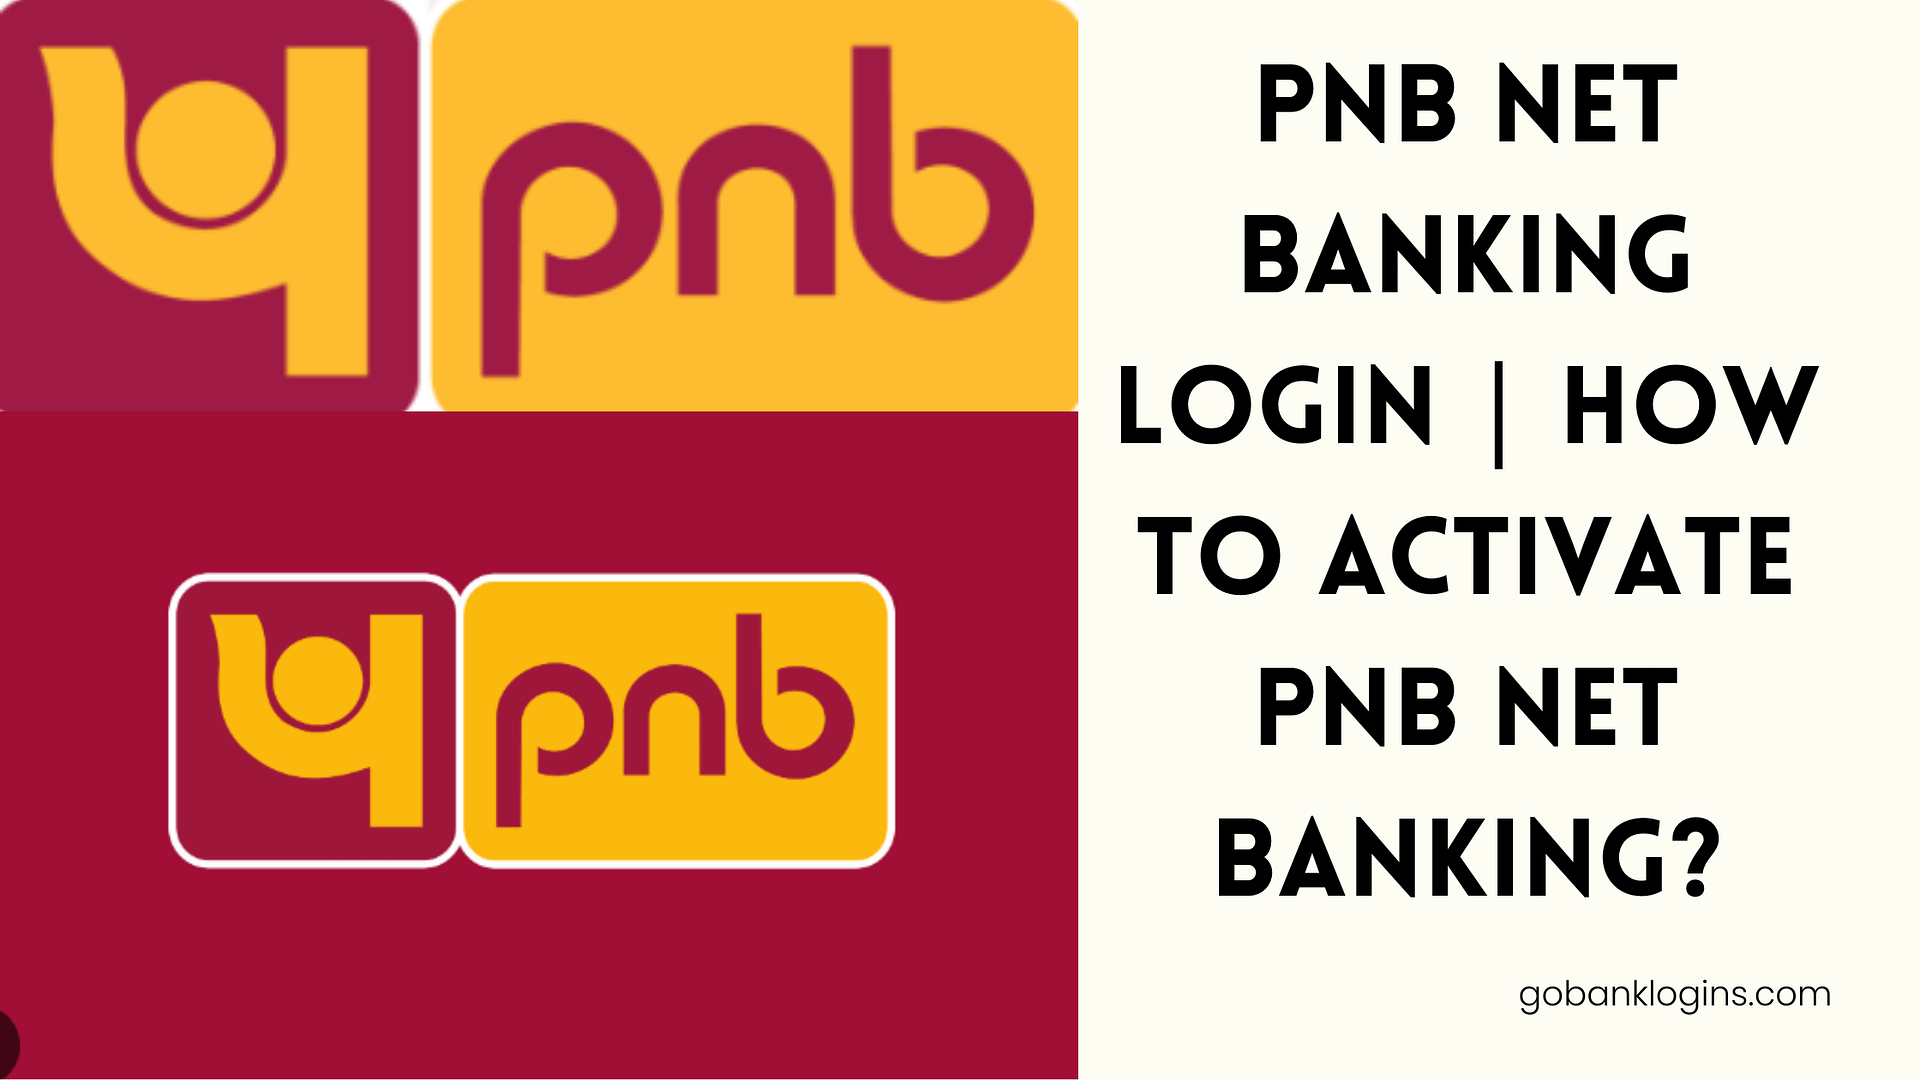 PNB Net Banking Login